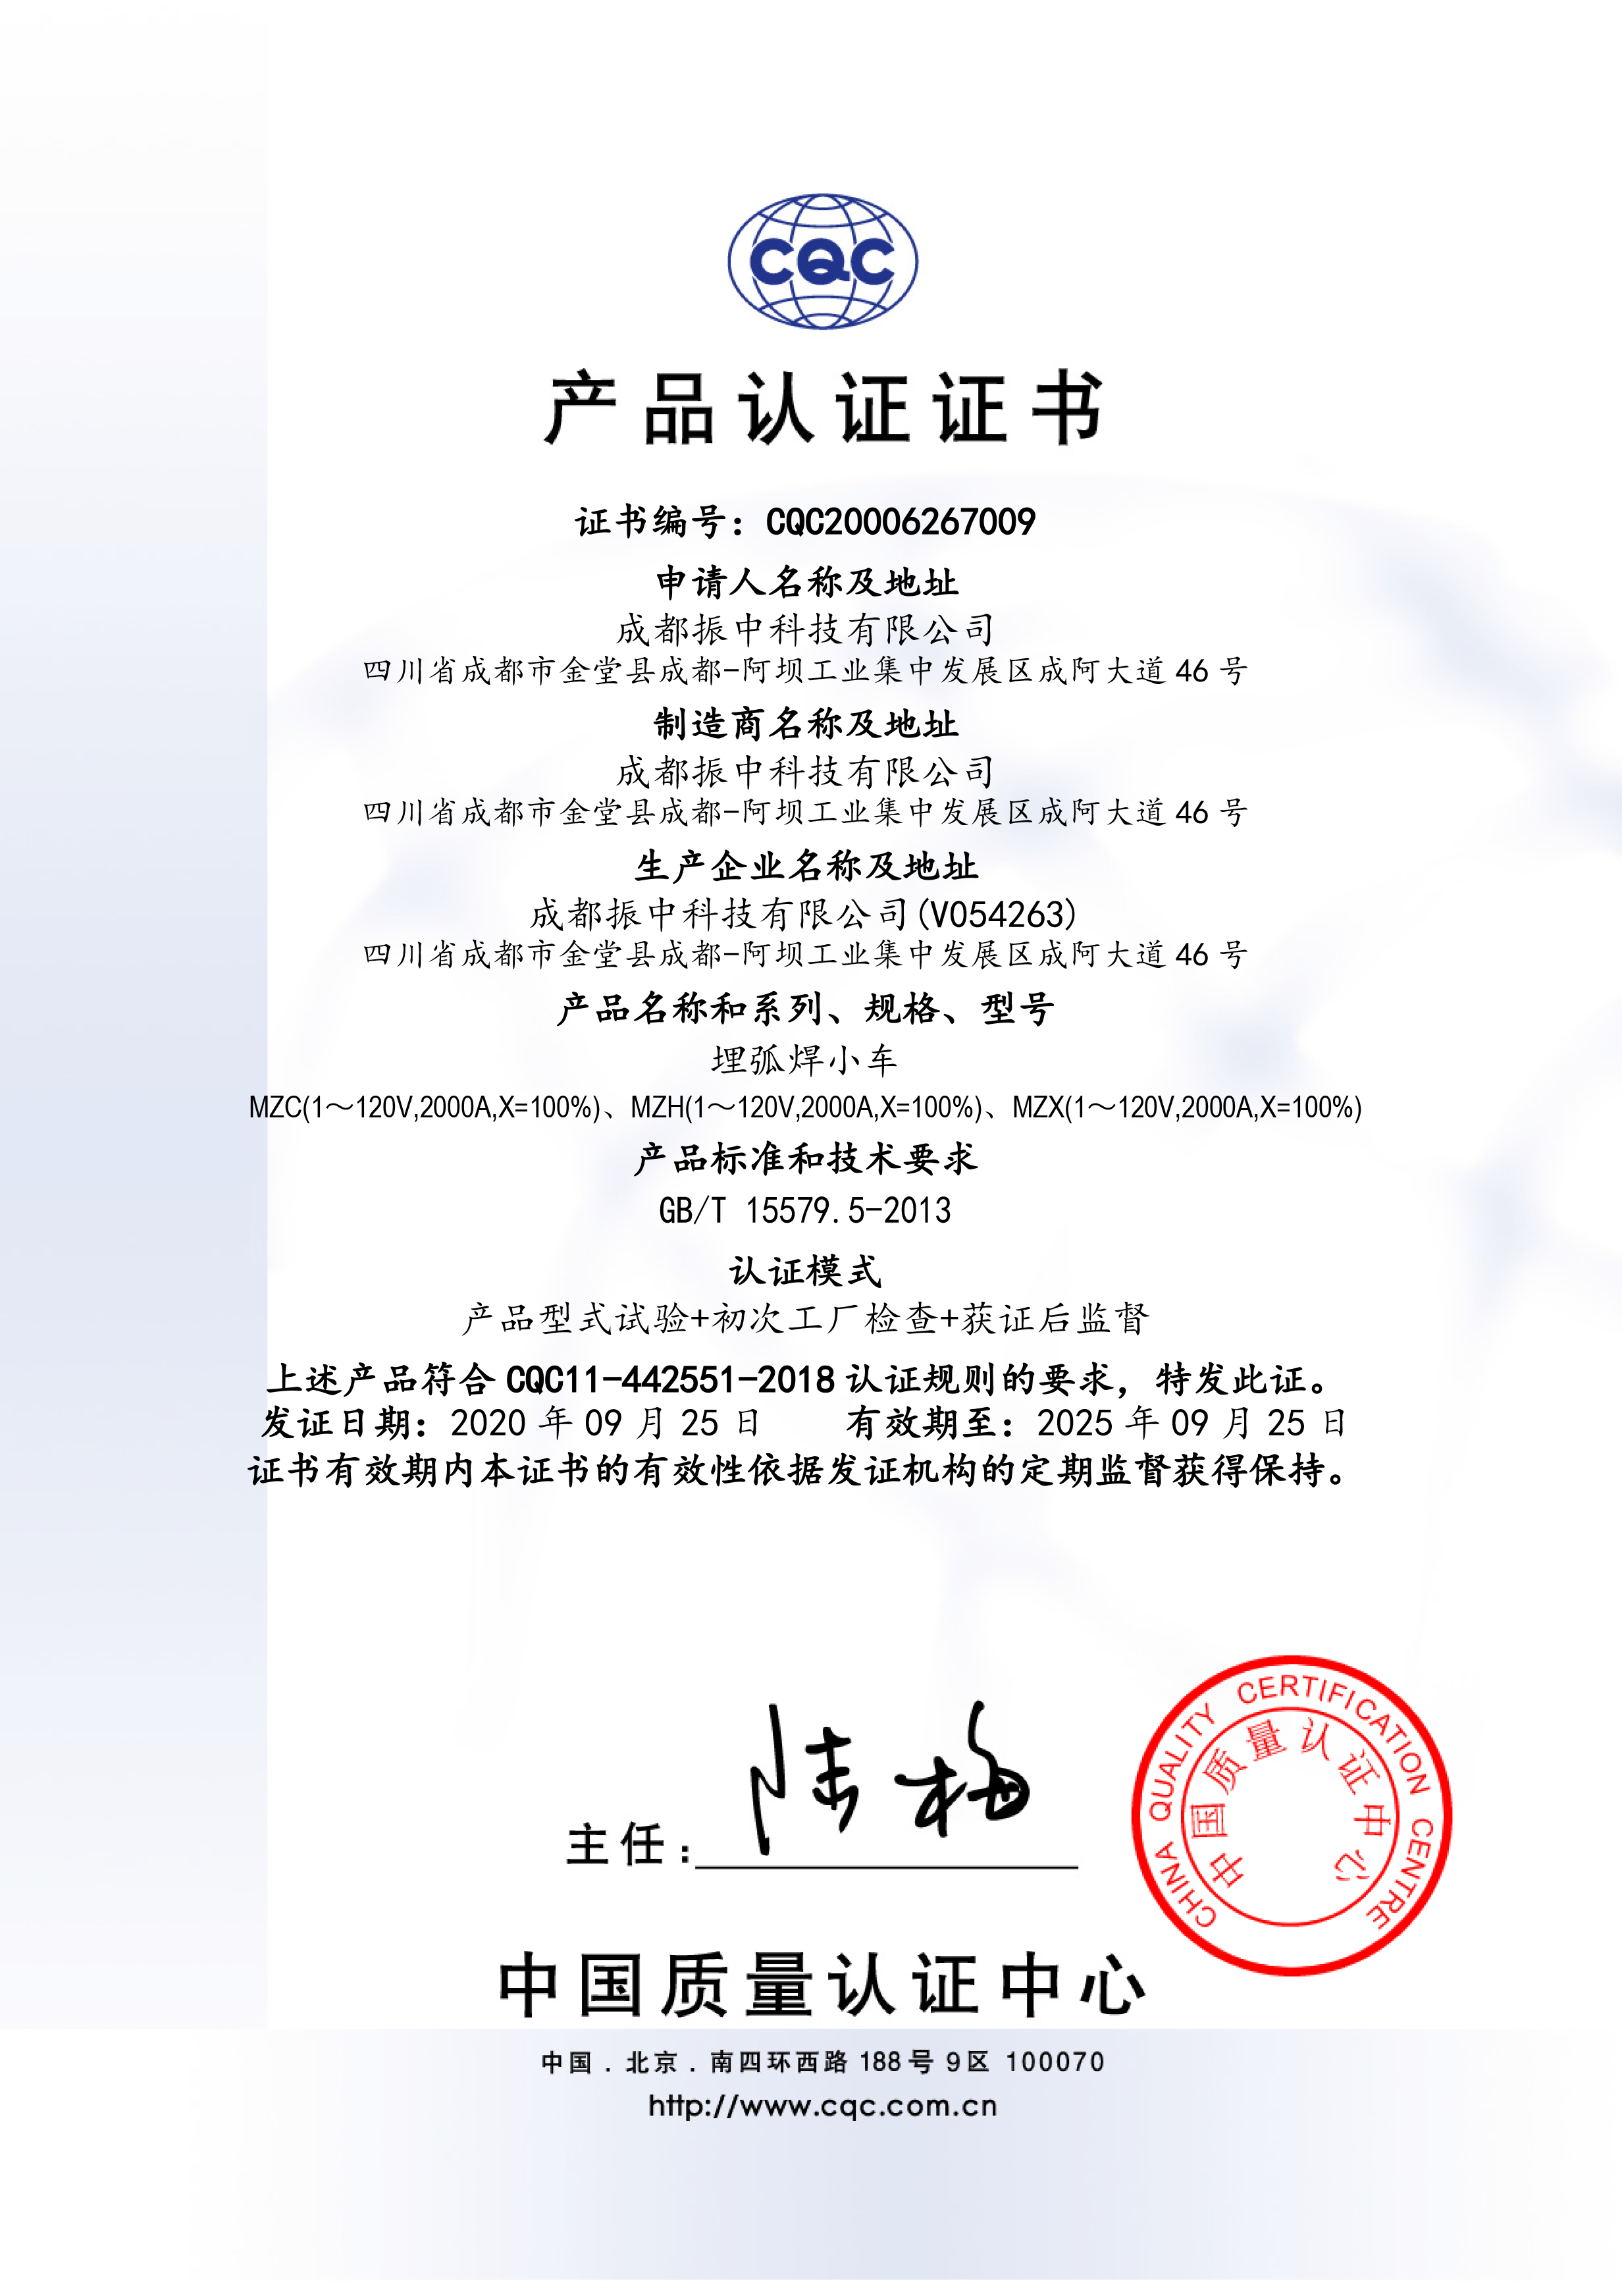 MZ埋弧焊小车CQC证书中文版